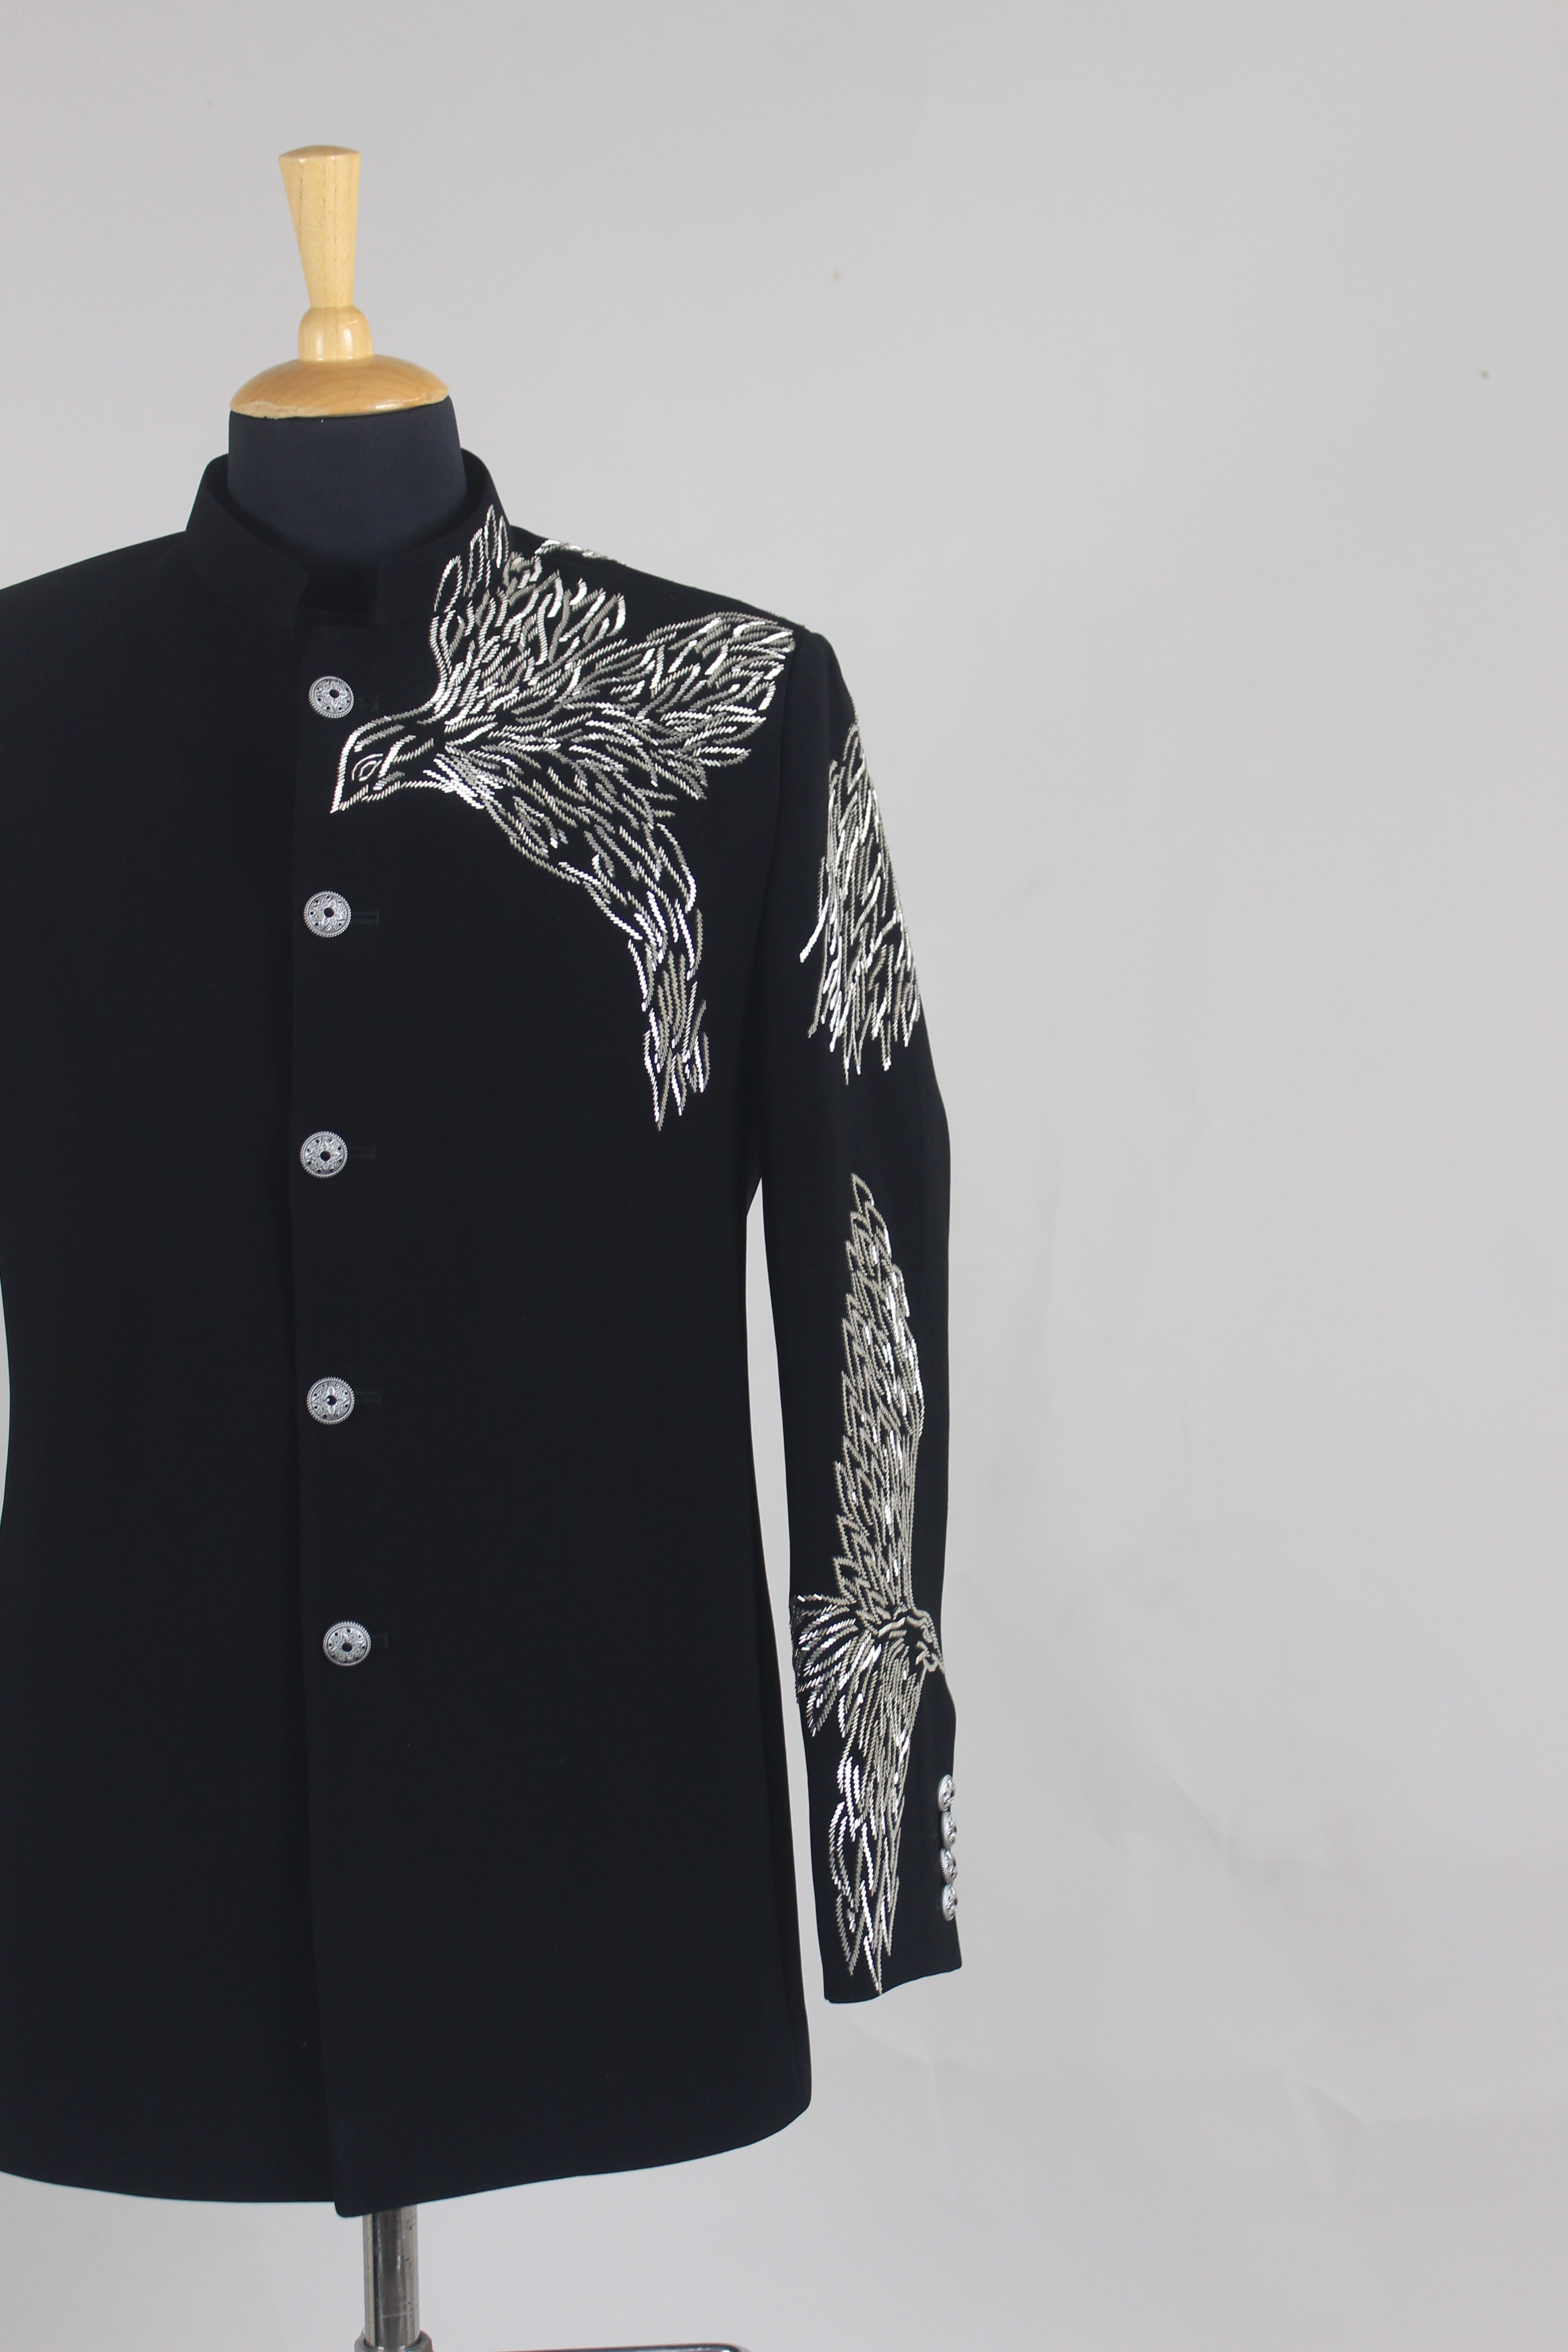 Mandarin Eagle Embroidered Jacket